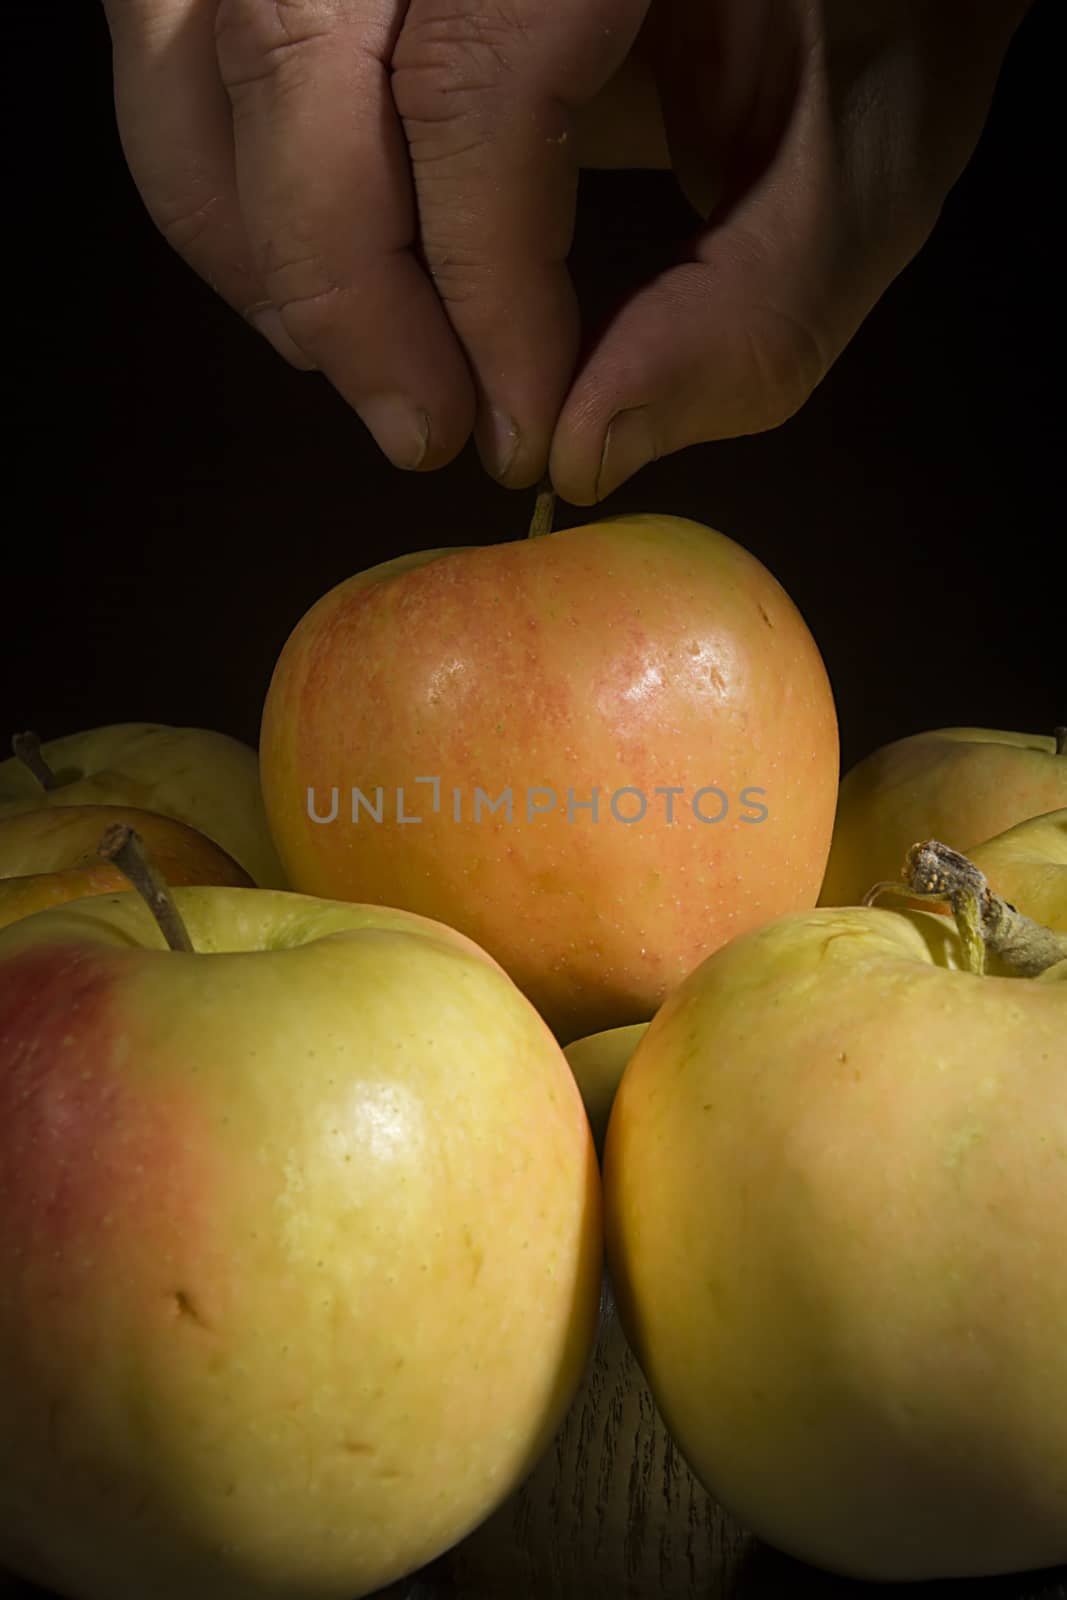 Male hand picks a ripe fresh apple